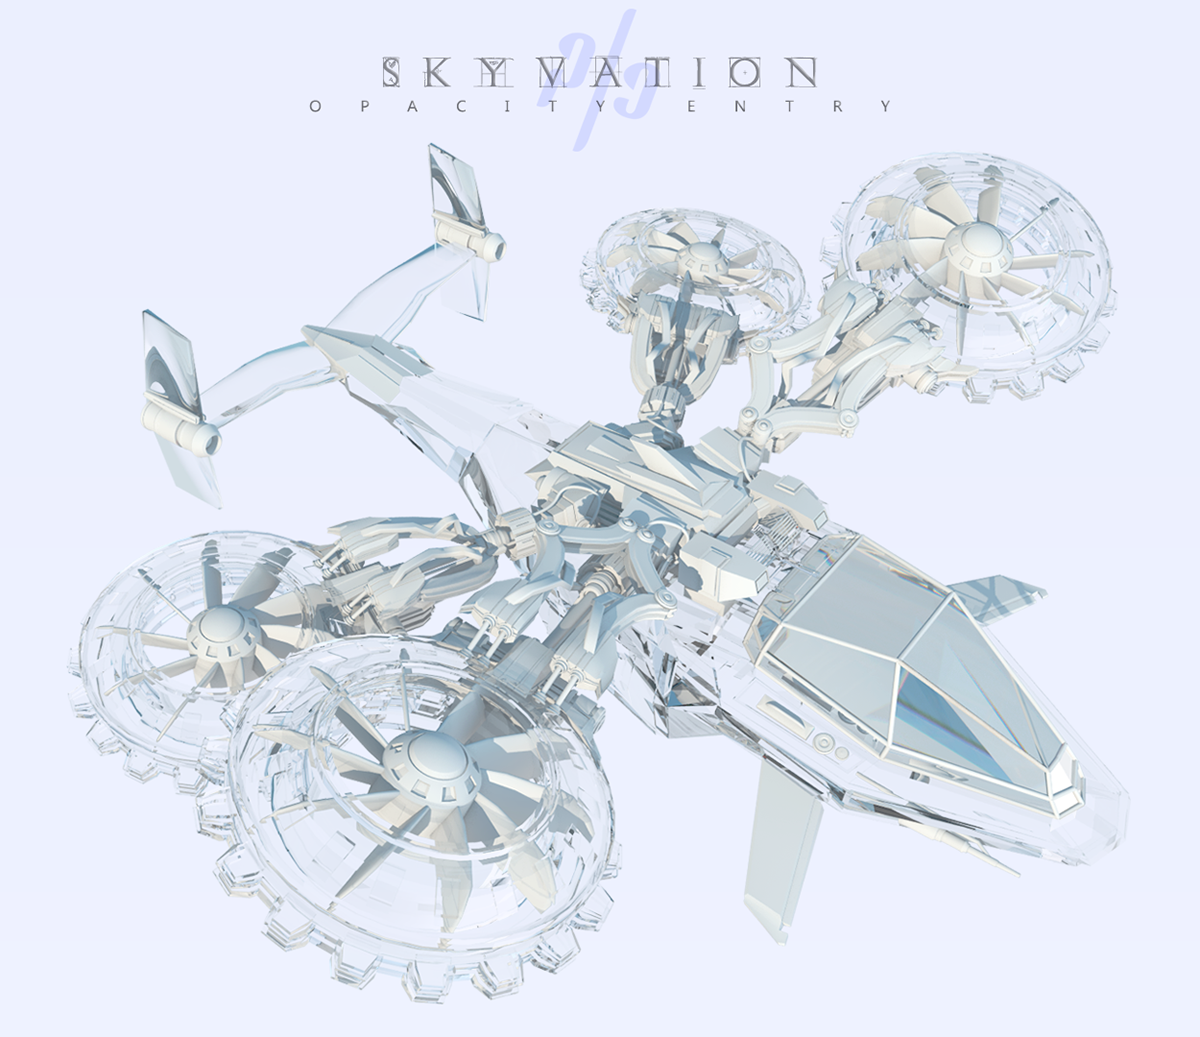 aviate SKY aviation Aviator skyvation Aphrodite opacity transperent